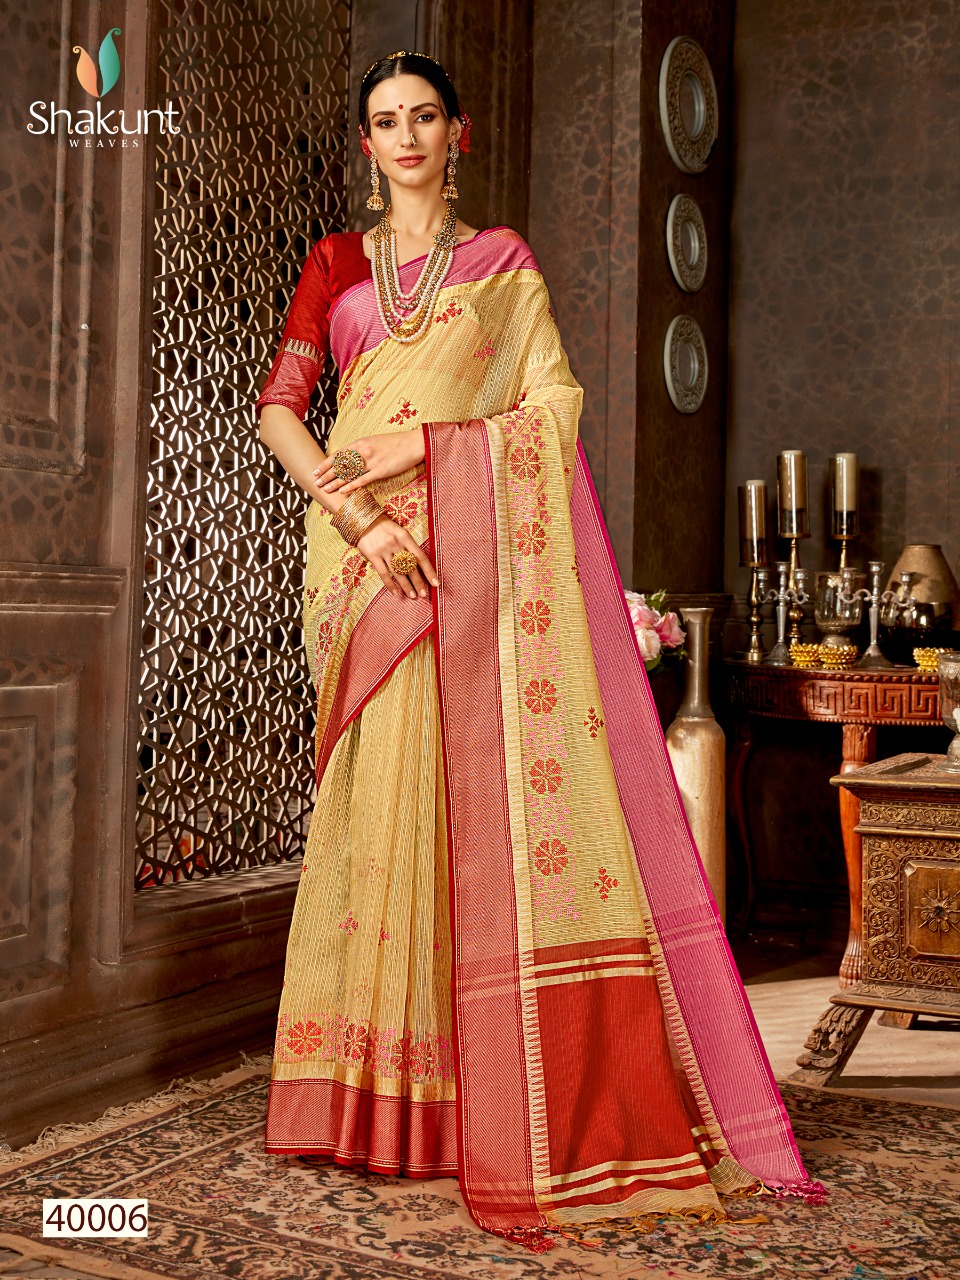 Shakunt weaves kanthkumari beautiful elegant sarees dealer